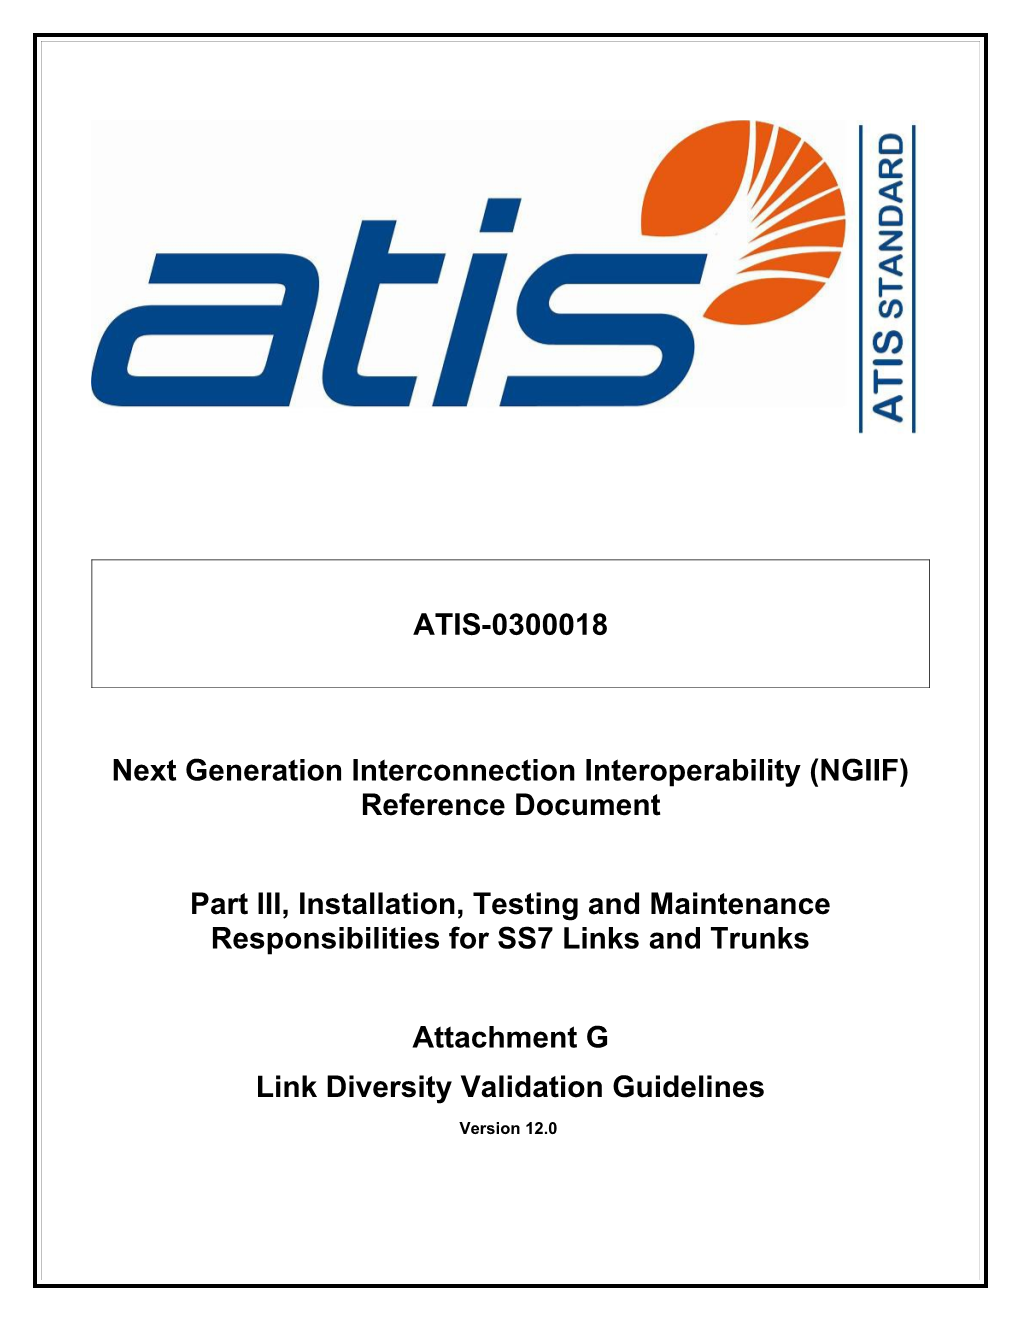 Next Generation Interconnection Interoperability (NGIIF) Reference Document s2